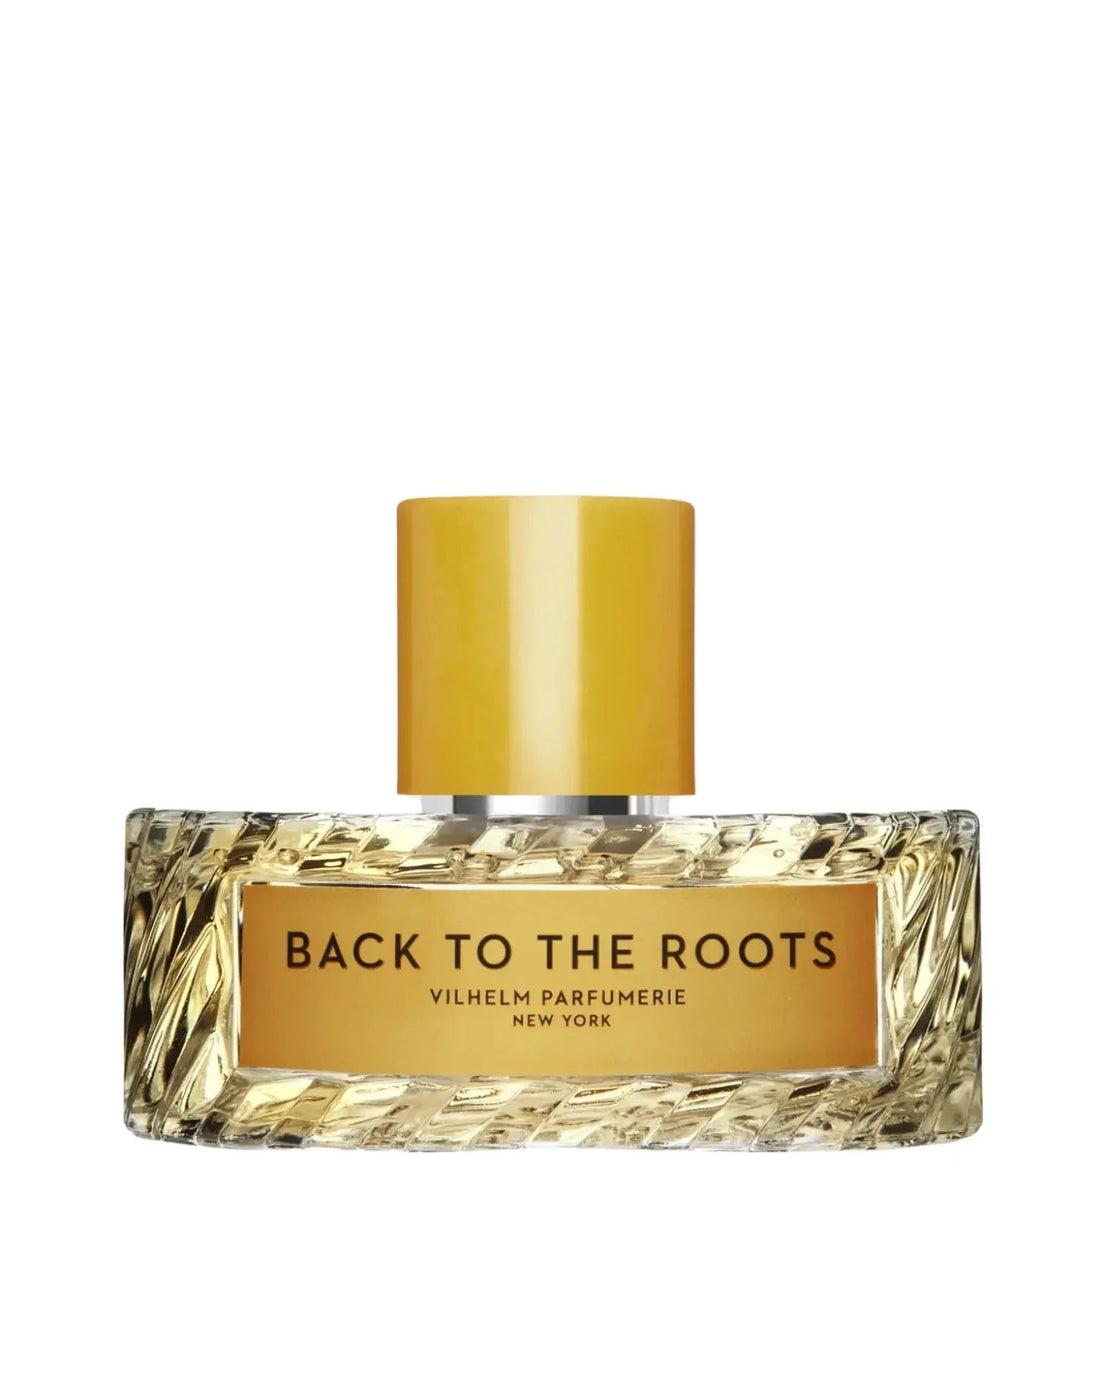 Back to the roots Vilhelm parfumerie - 3 x 10 ml